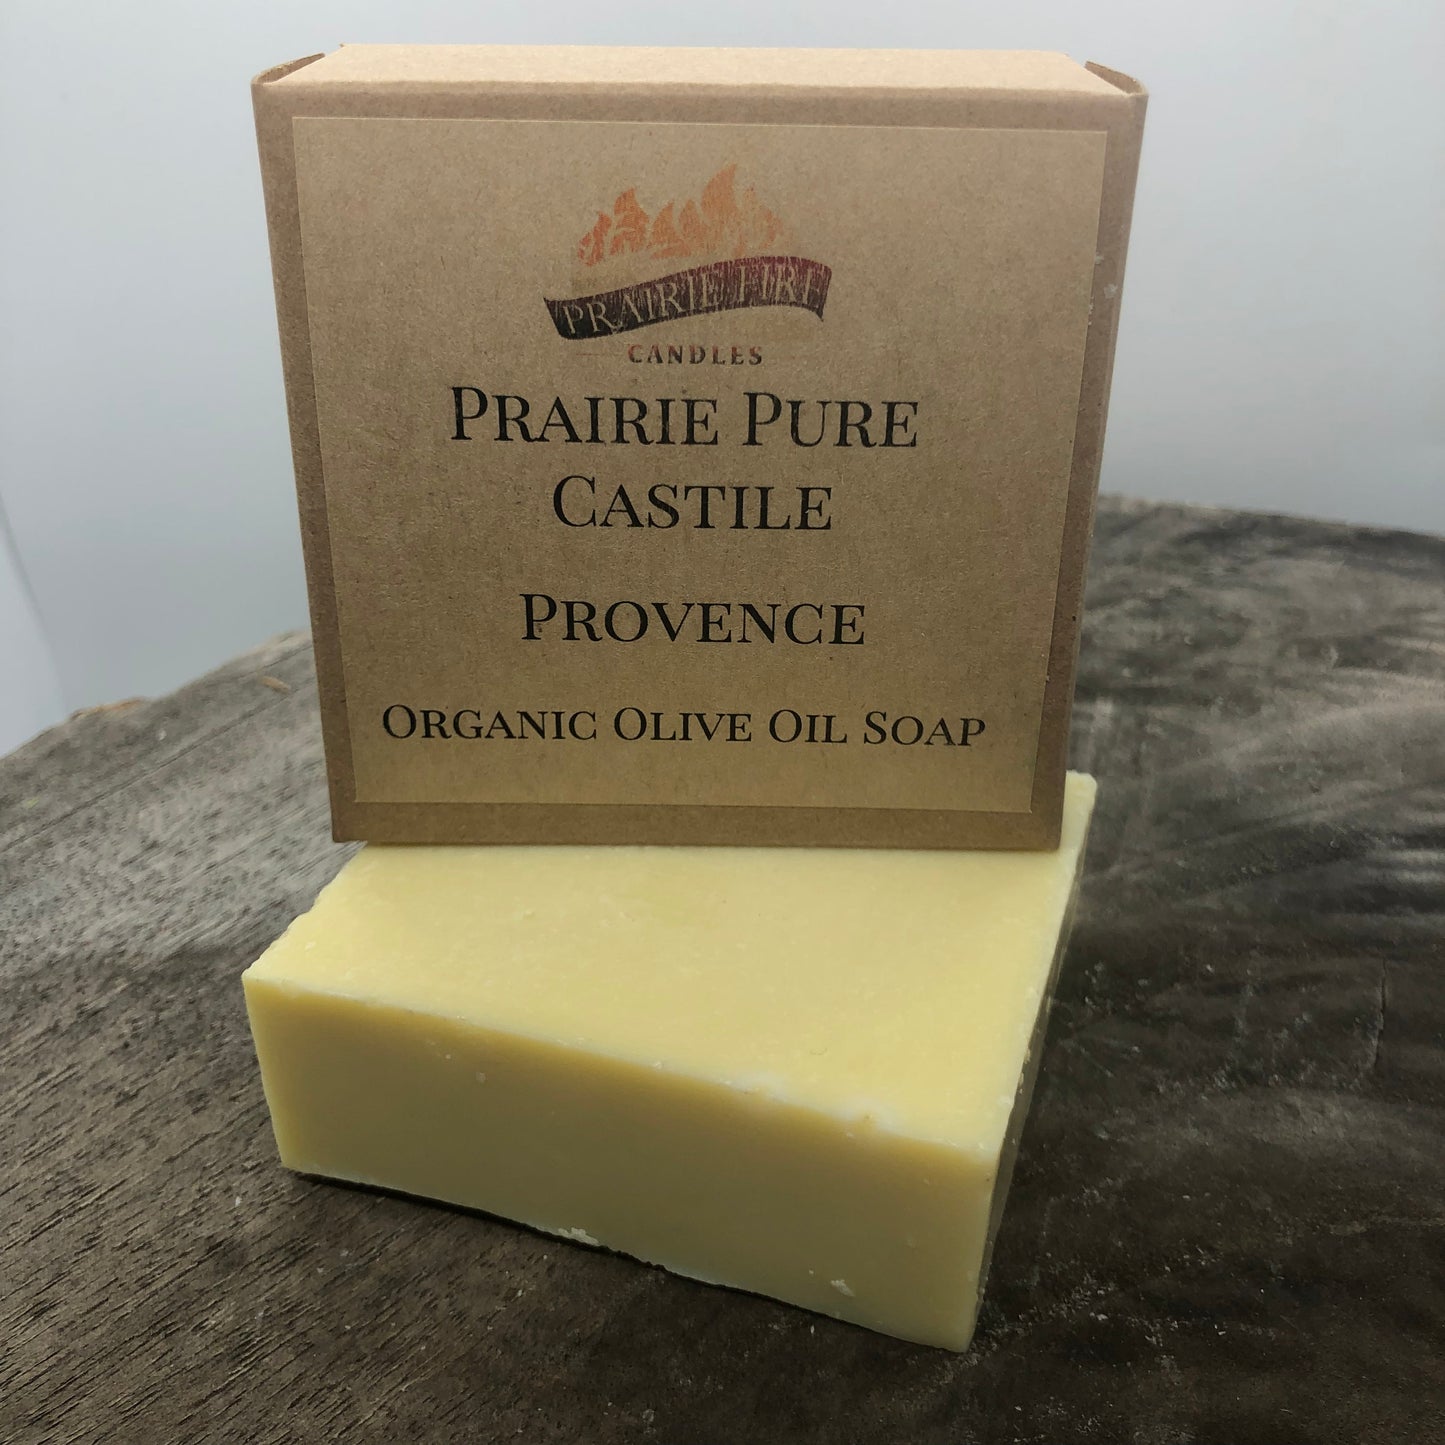 Provence (Lavender) Real Castile Organic Olive Oil Soap for Sensitive Skin - Dye Free - 100% Certified Organic Extra Virgin Olive Oil